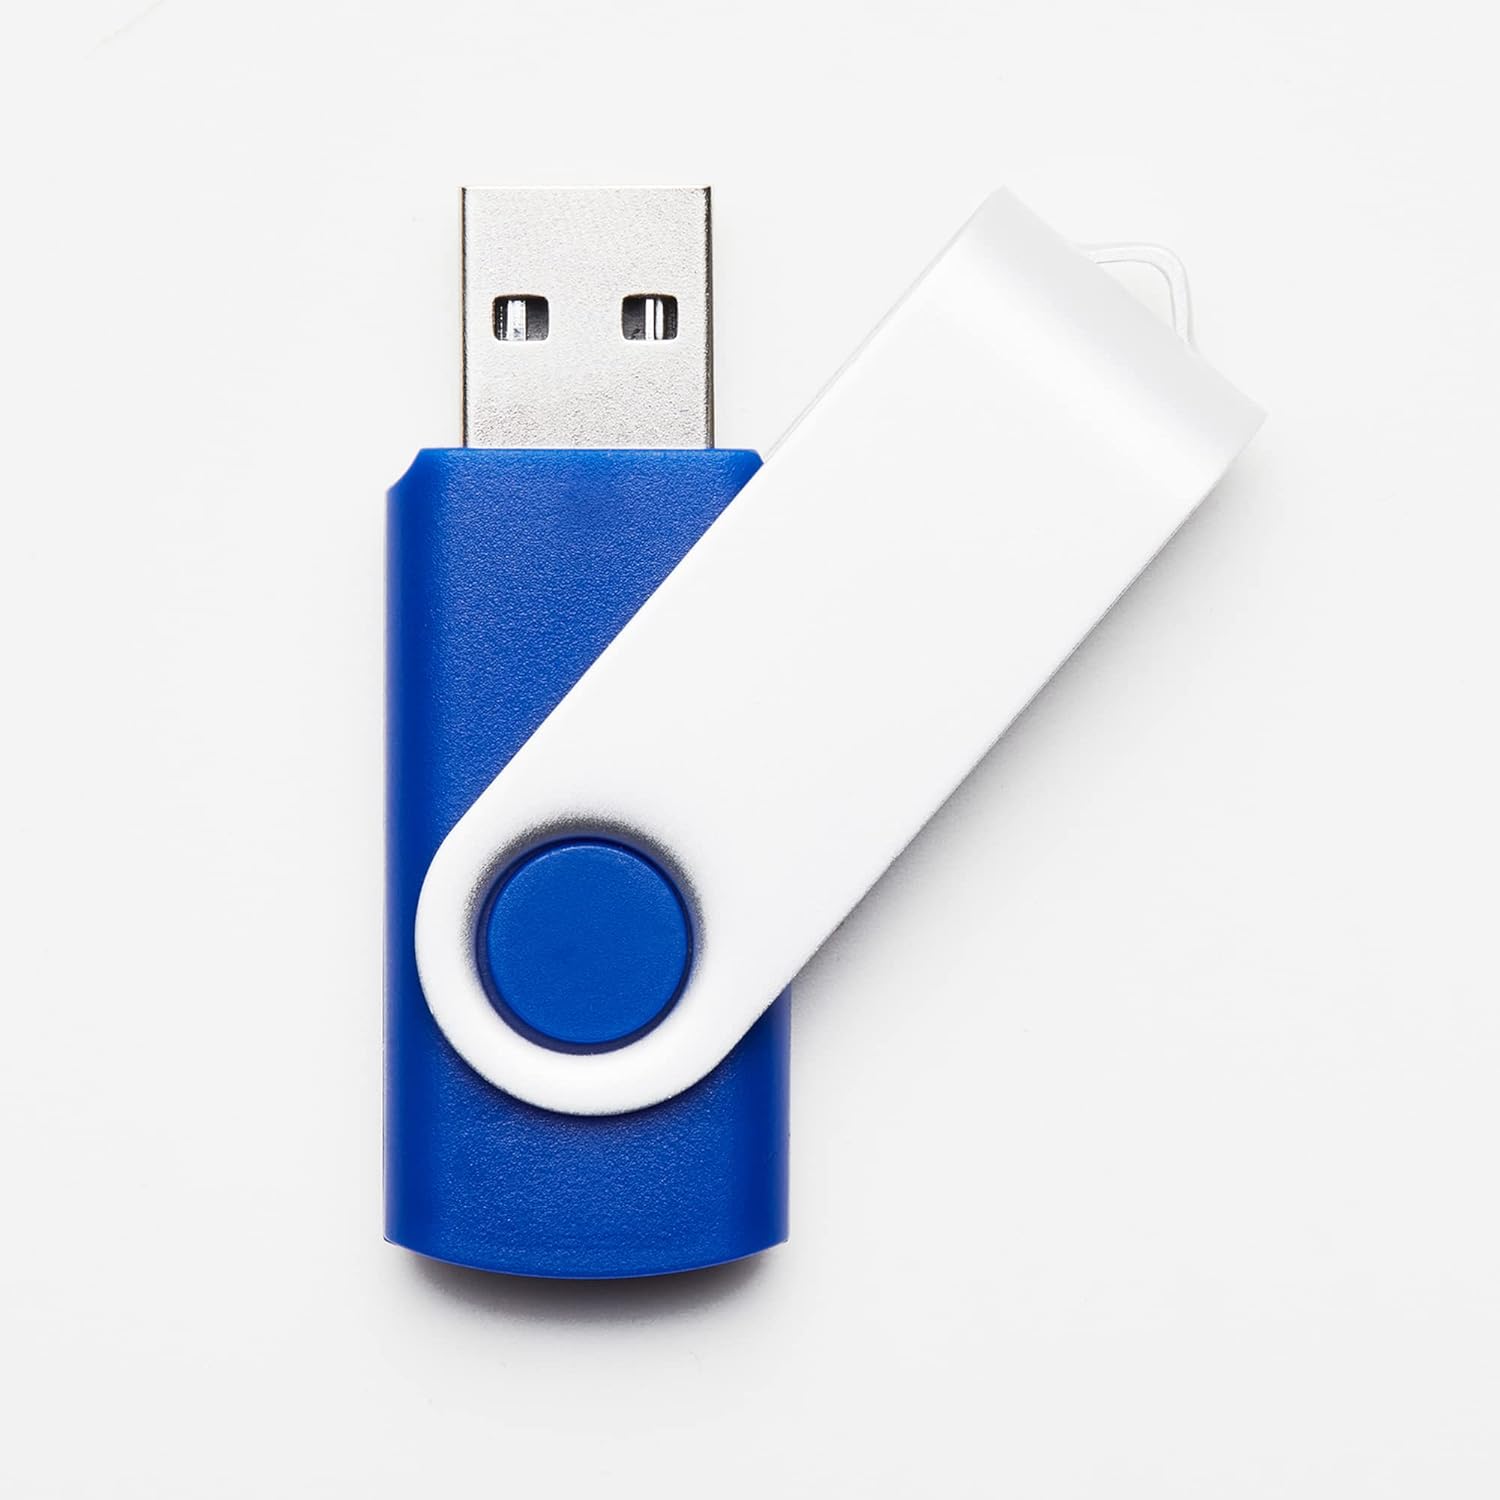 20 Clé USB 2.0 Flash Drive USB Pivotant